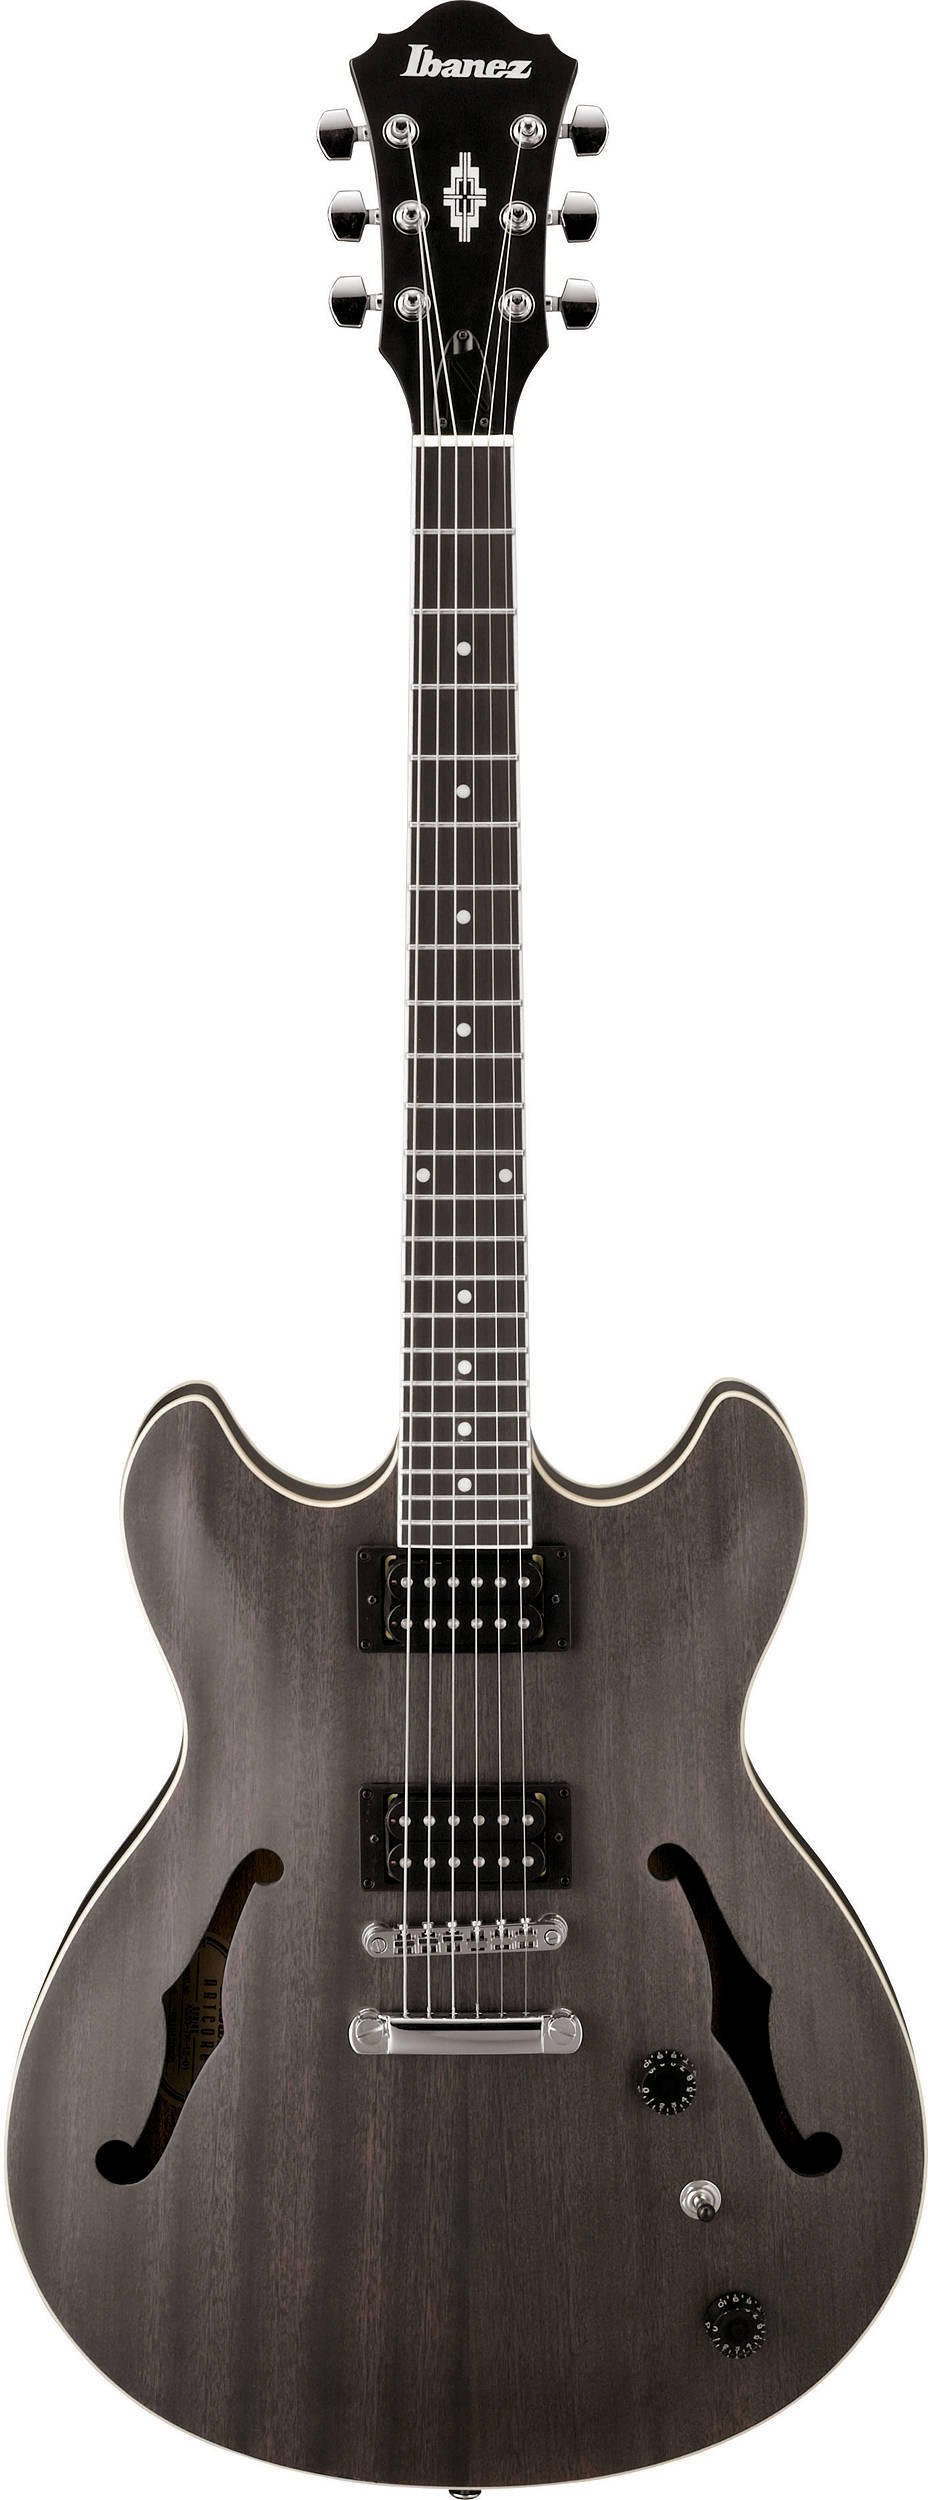 Ibanez AS53 Artcore Semi-Hollow Electric Guitar (Flat Transparent Black) -  AS53TKF